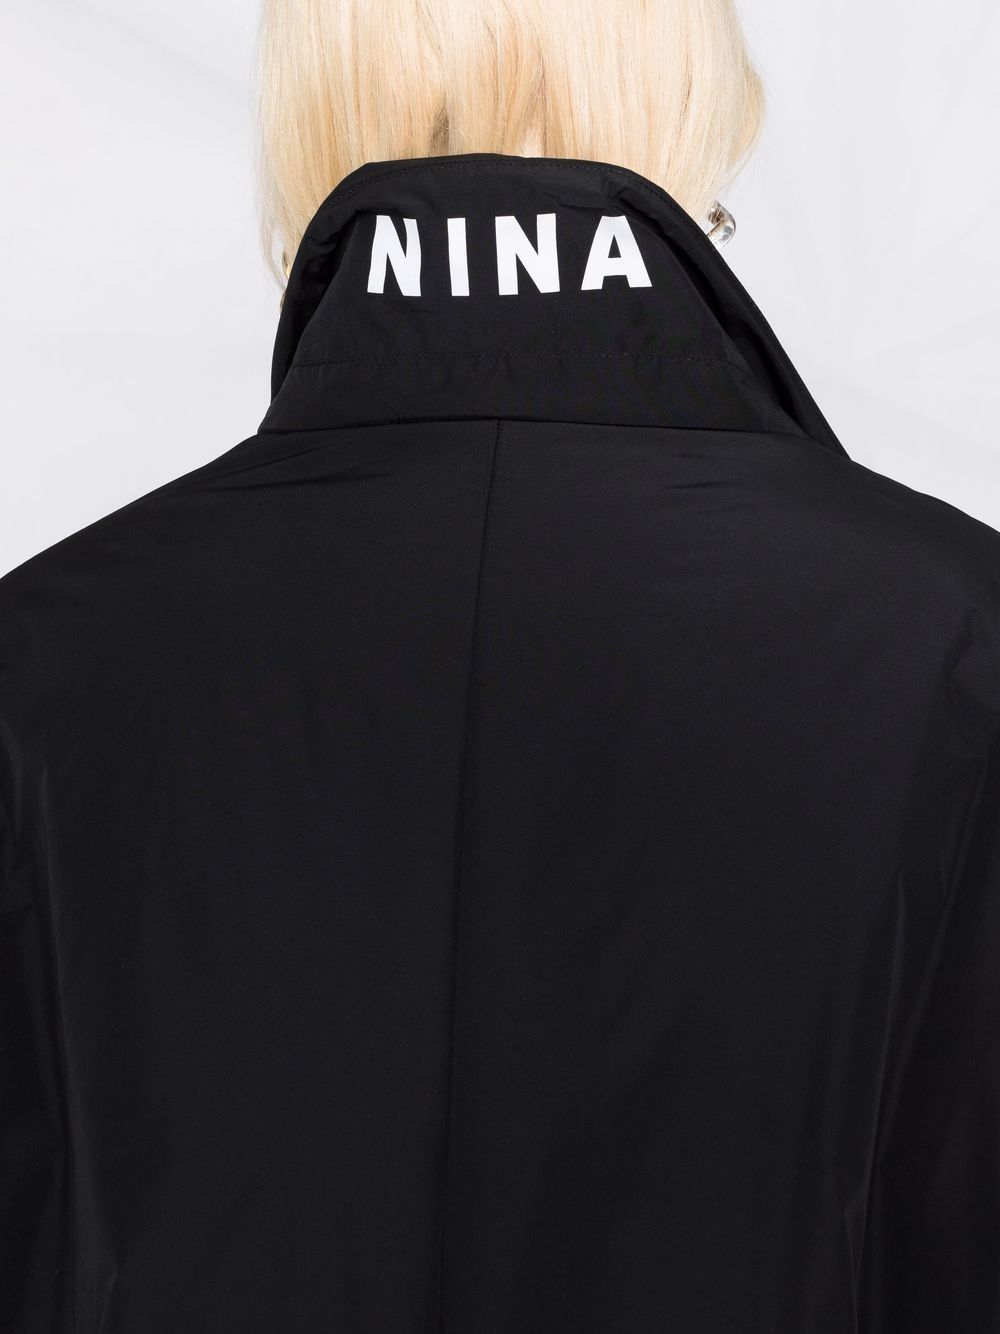 Nina Ricci Cocoon leopard-print Jacket - Farfetch